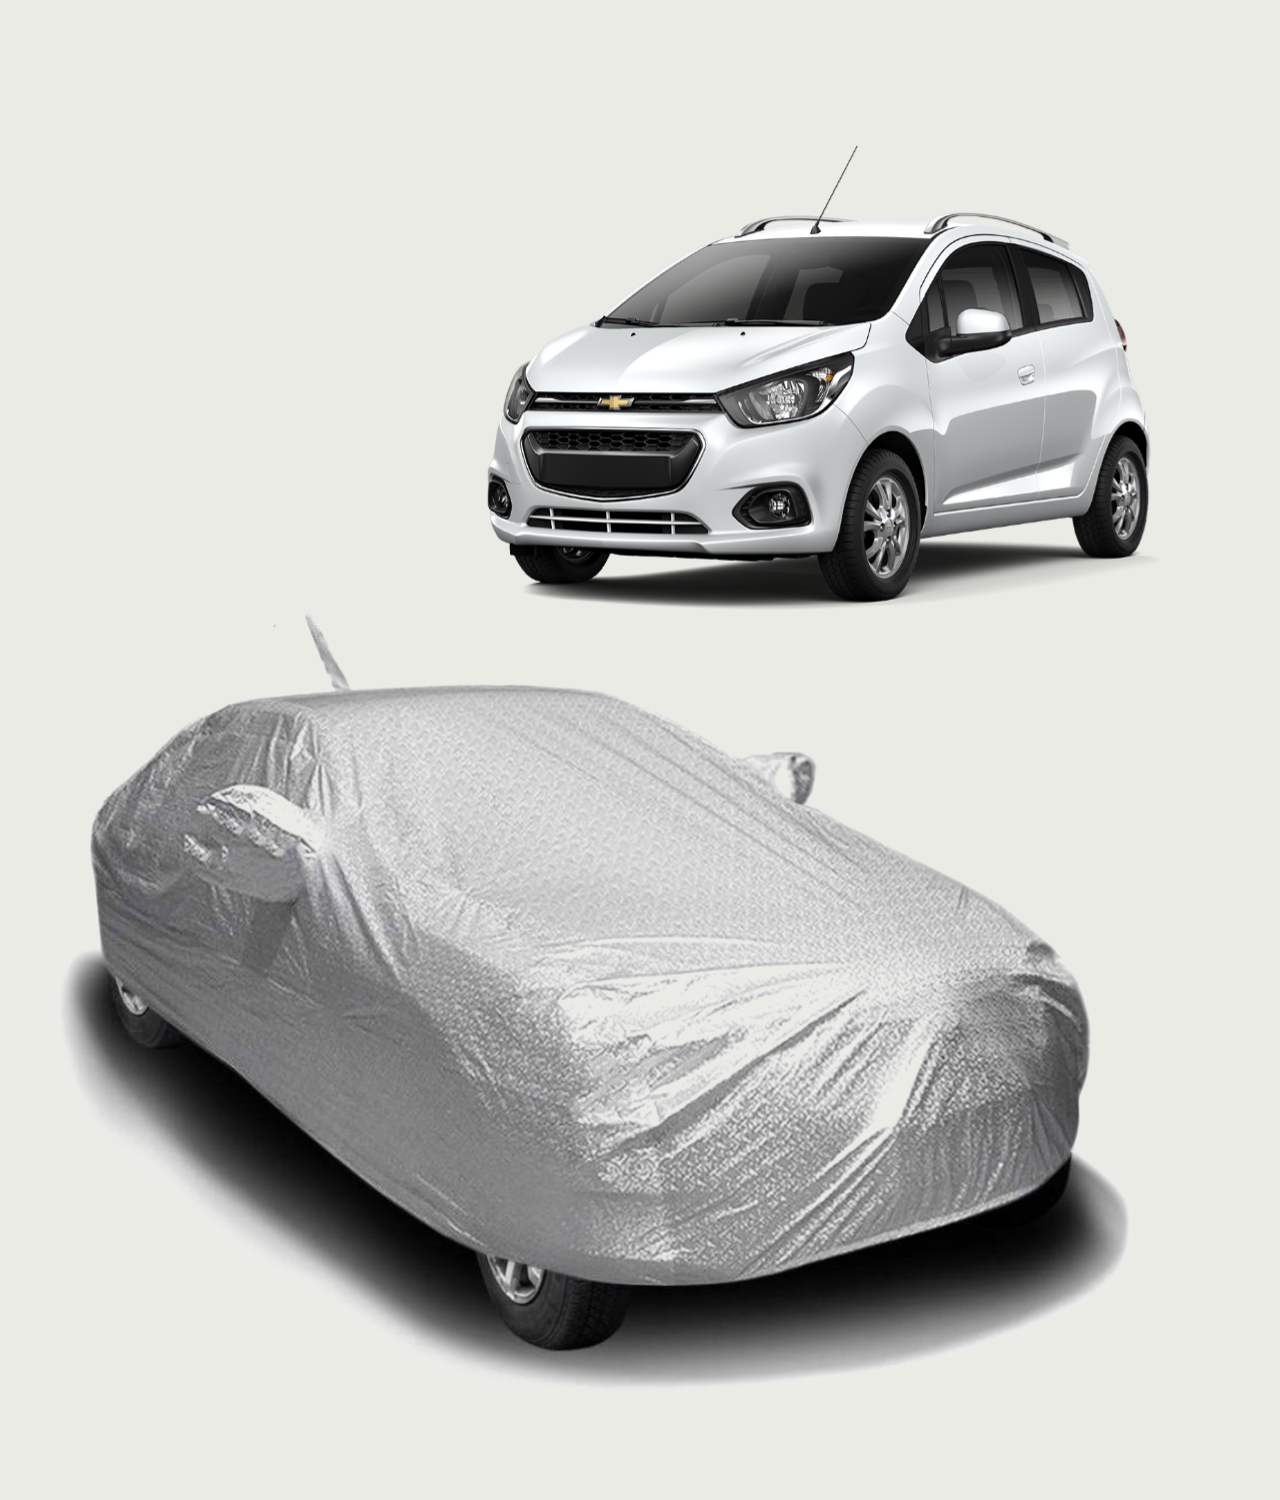 Chevrolet Spark Premium Silver Outdoor Car Cover - Nellai Tarpaulin